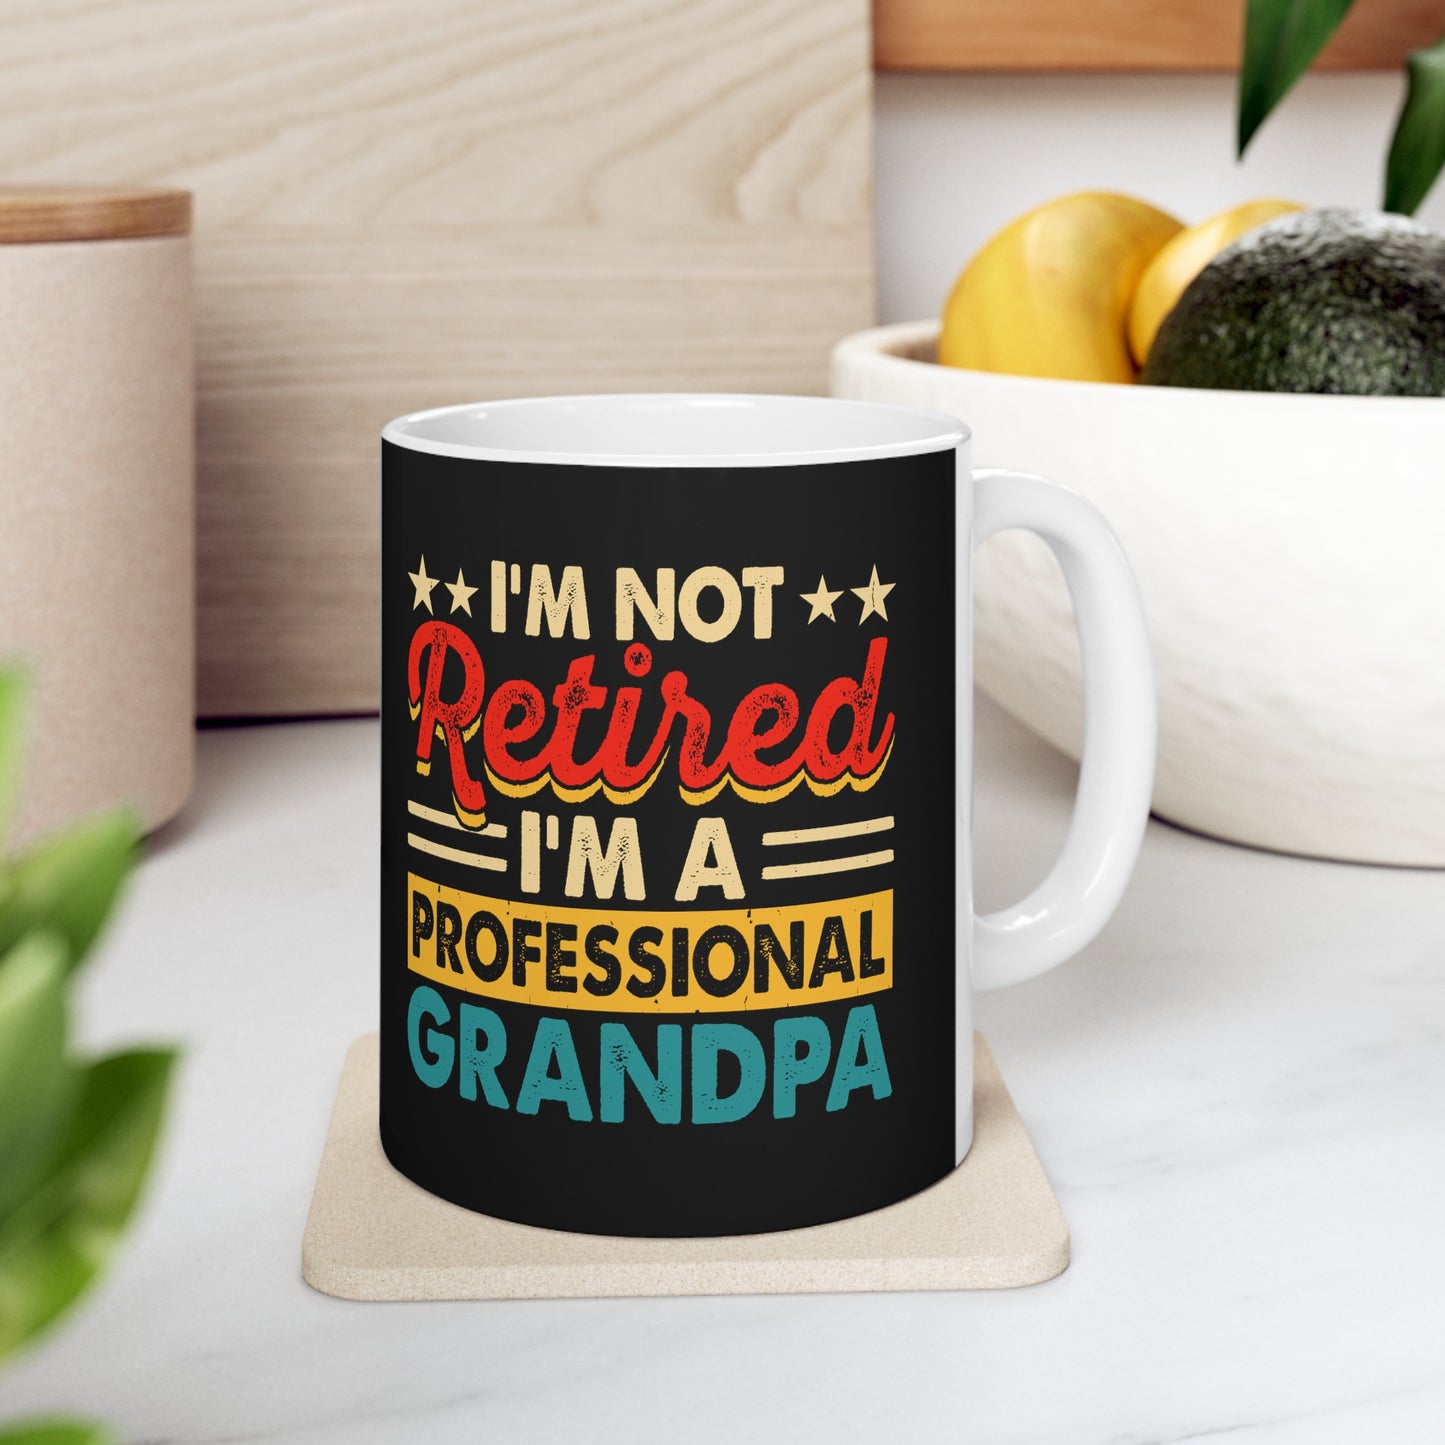 I'm Not Retired I'm A Professional Grandpa Ceramic Mug, 11oz